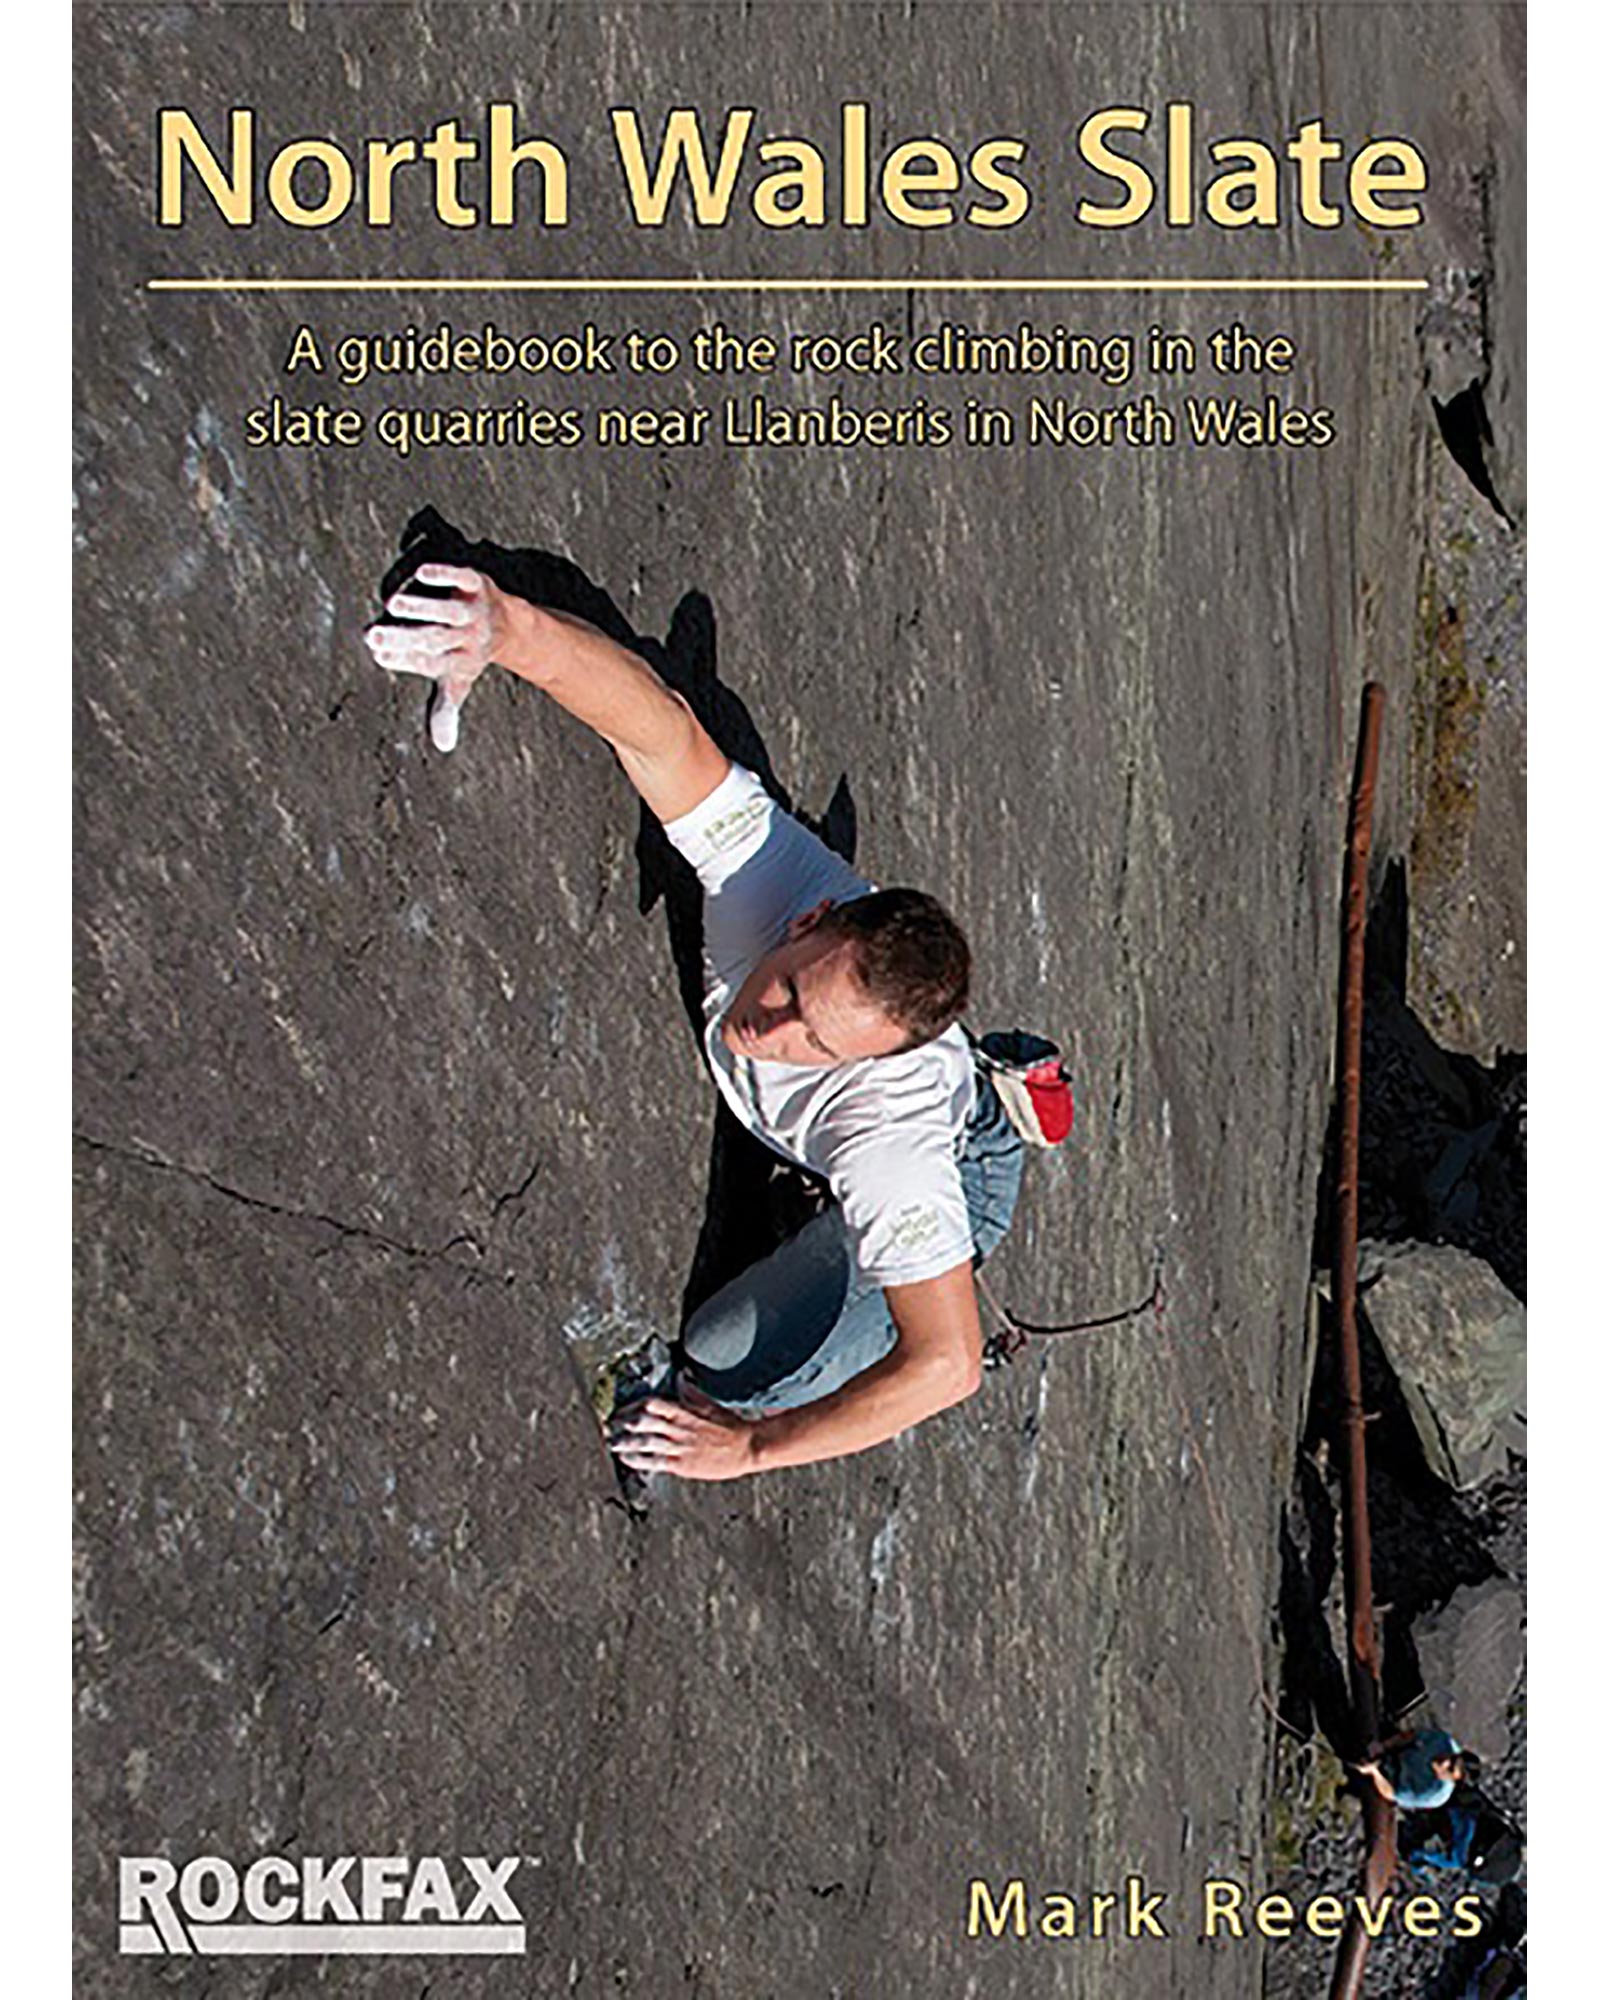 Rockfax North Wales Slate Guide Book